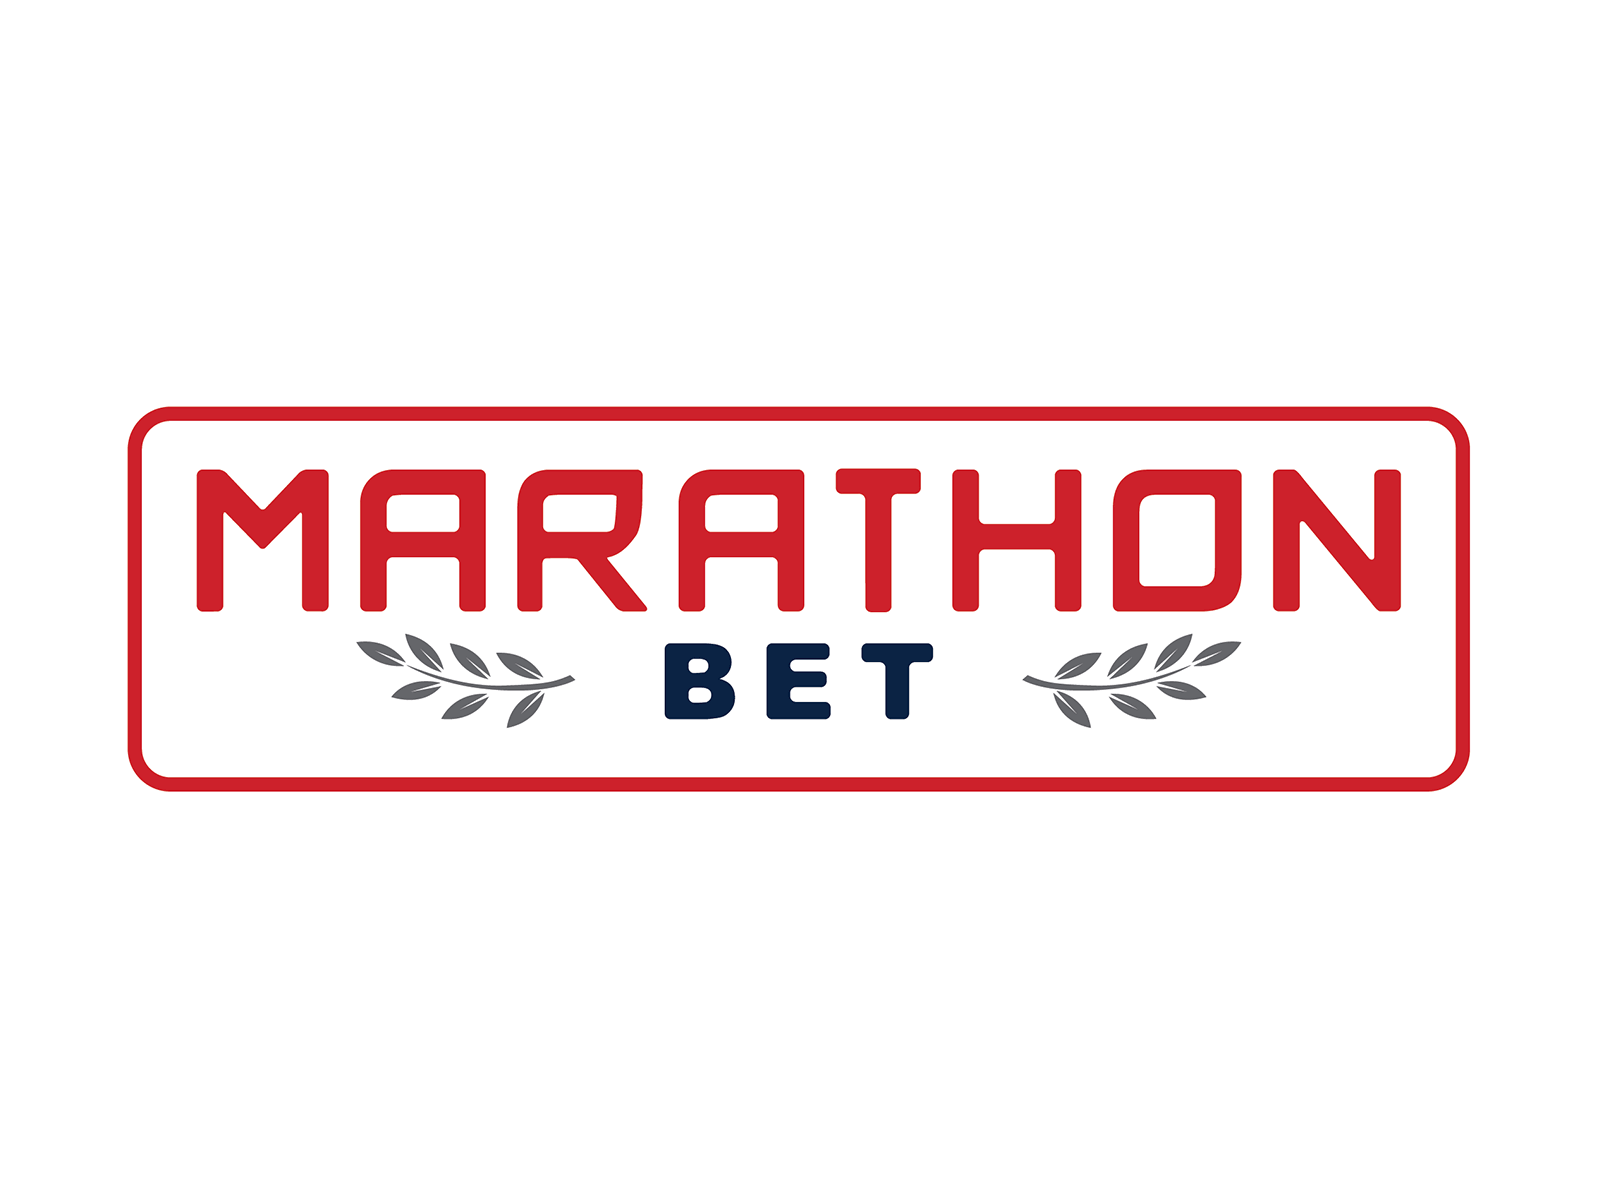 Marathonbet Sign Up Offer